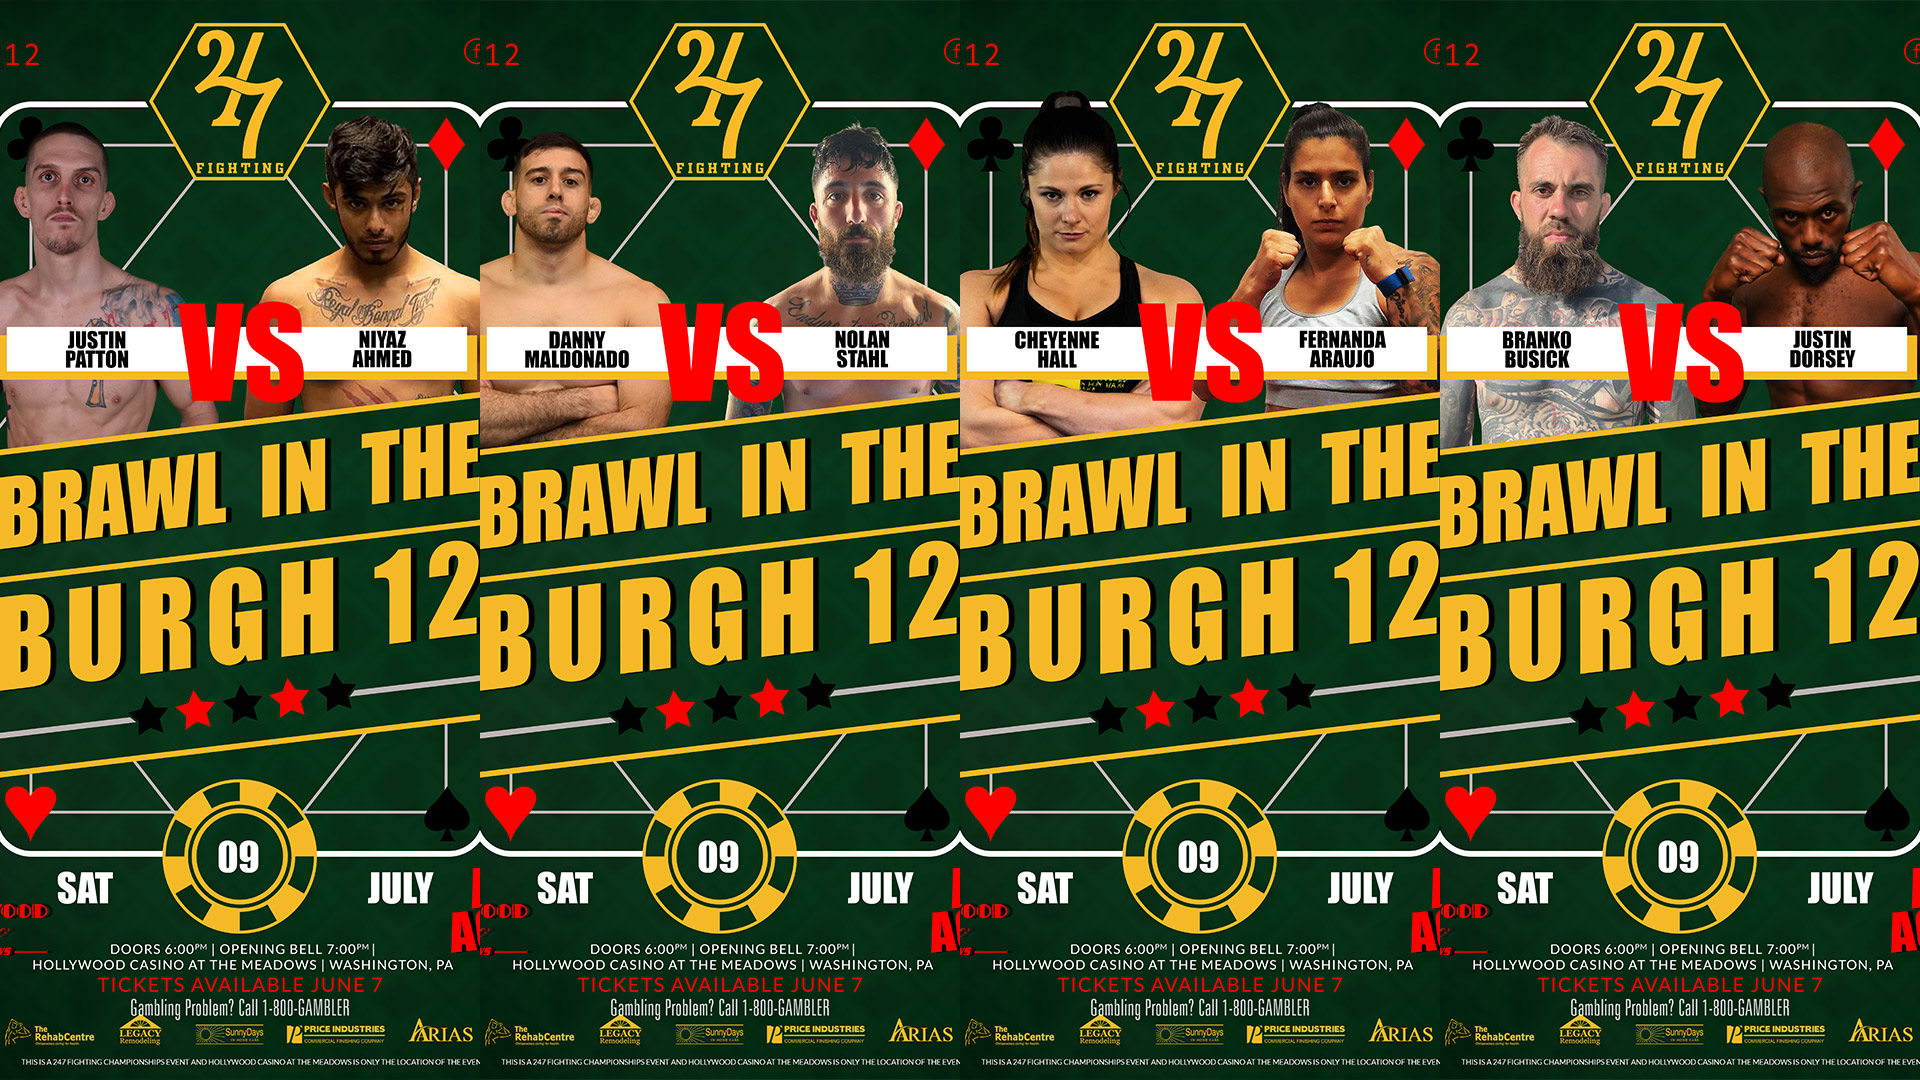 brawl-burgh-12-pro-fights-image-247-fighting-championships